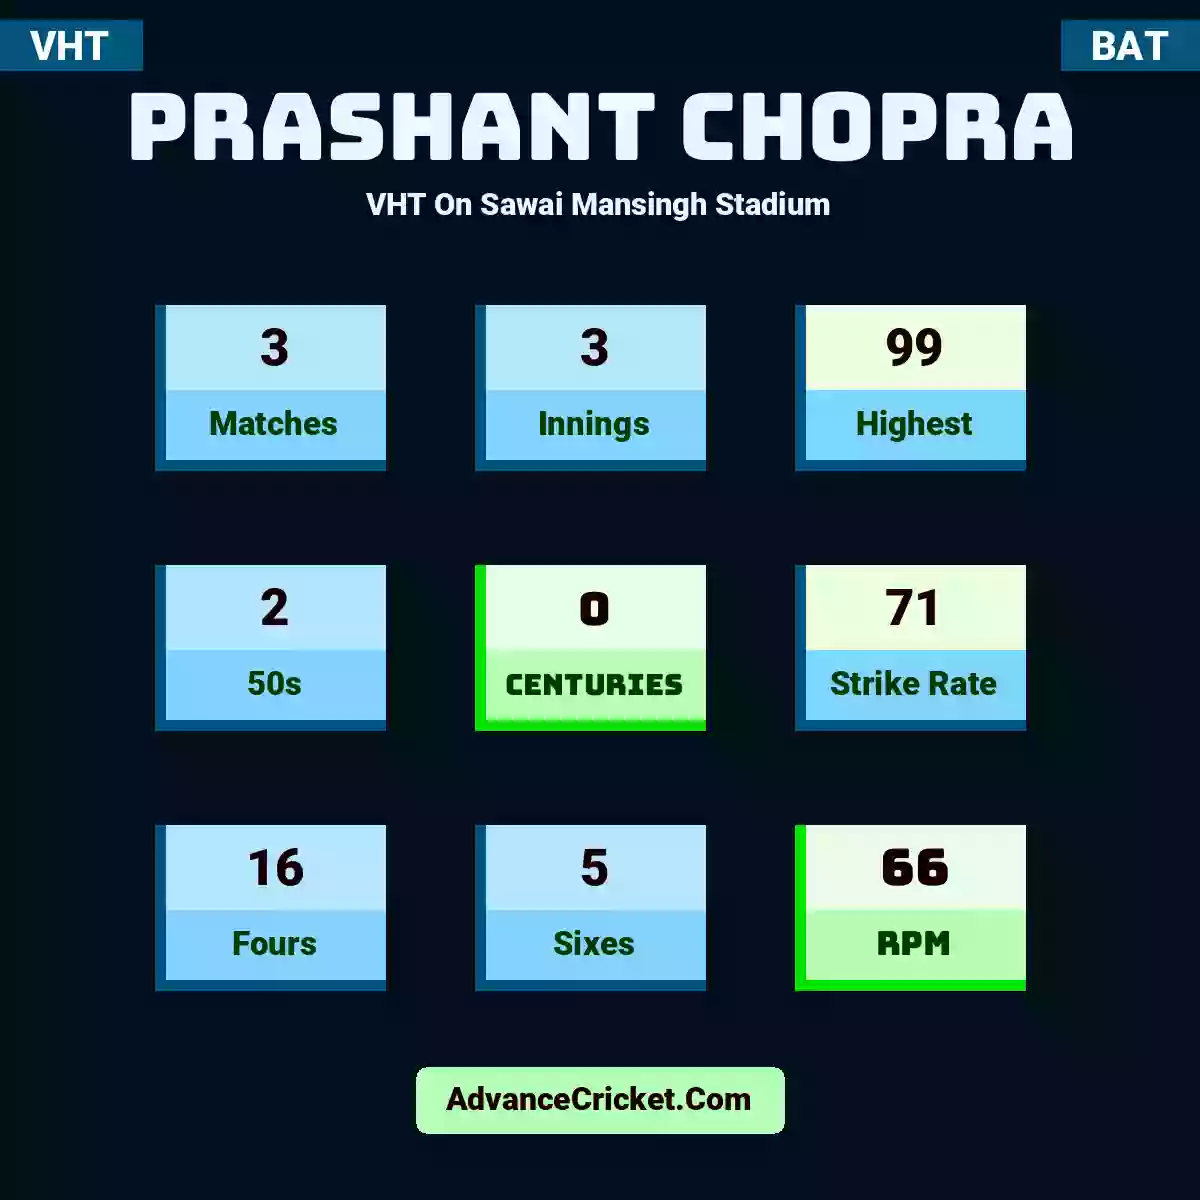 Prashant Chopra VHT  On Sawai Mansingh Stadium, Prashant Chopra played 3 matches, scored 99 runs as highest, 2 half-centuries, and 0 centuries, with a strike rate of 71. P.Chopra hit 16 fours and 5 sixes, with an RPM of 66.